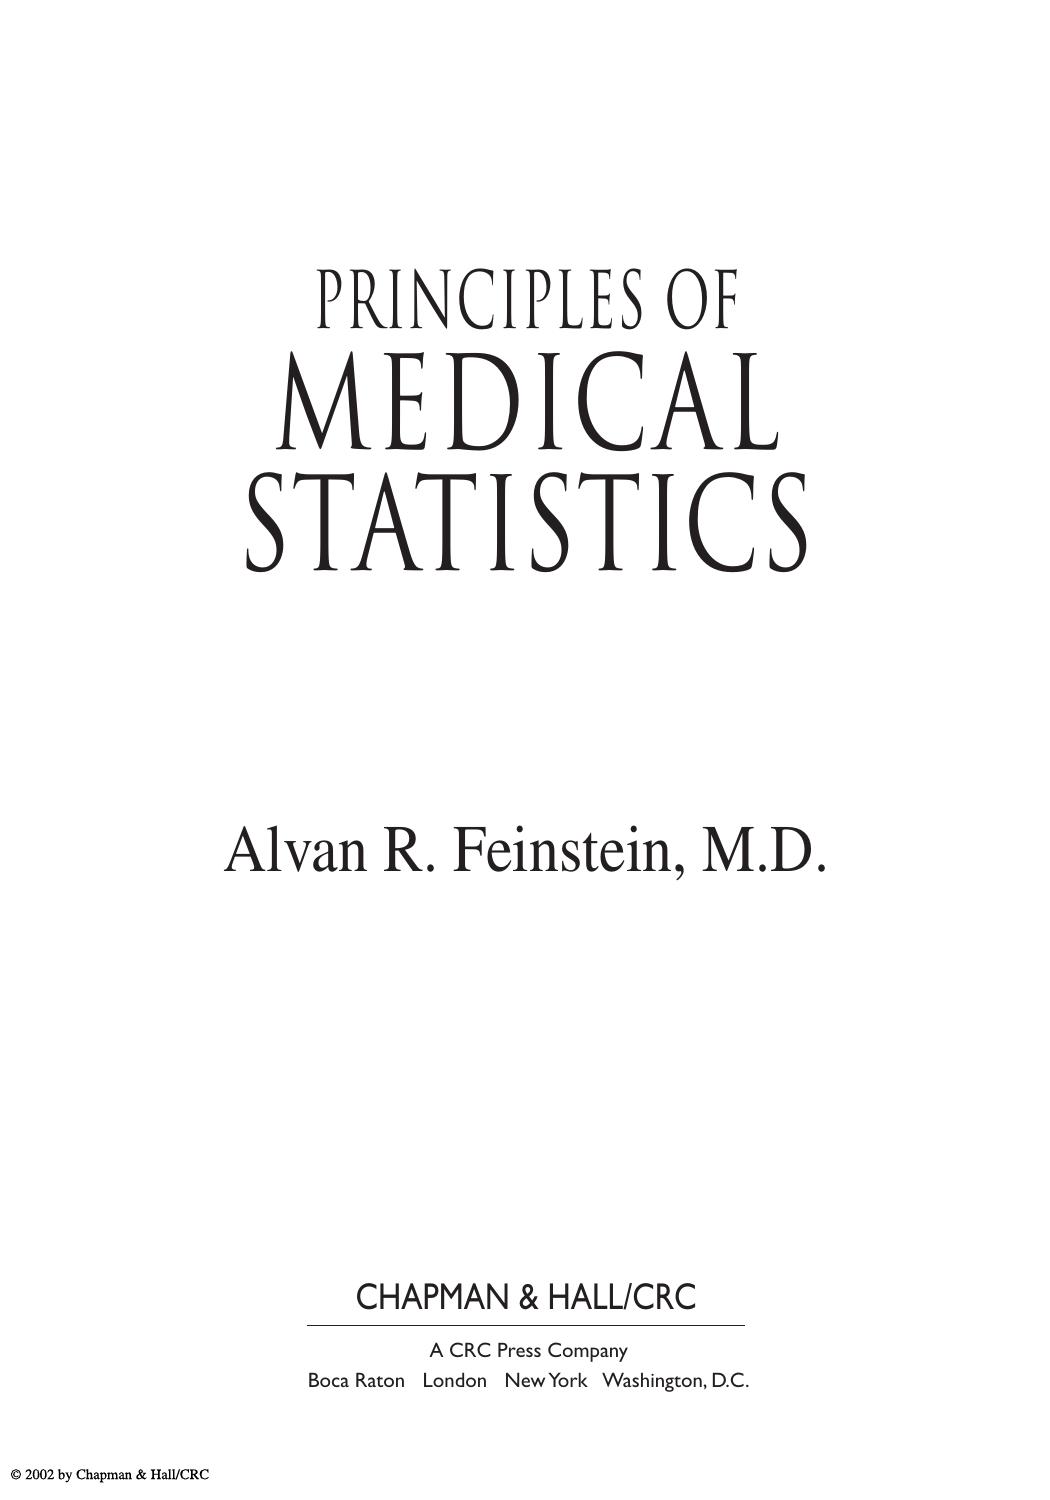 Principles of Medical Statistics, 2002 (Feinstein)